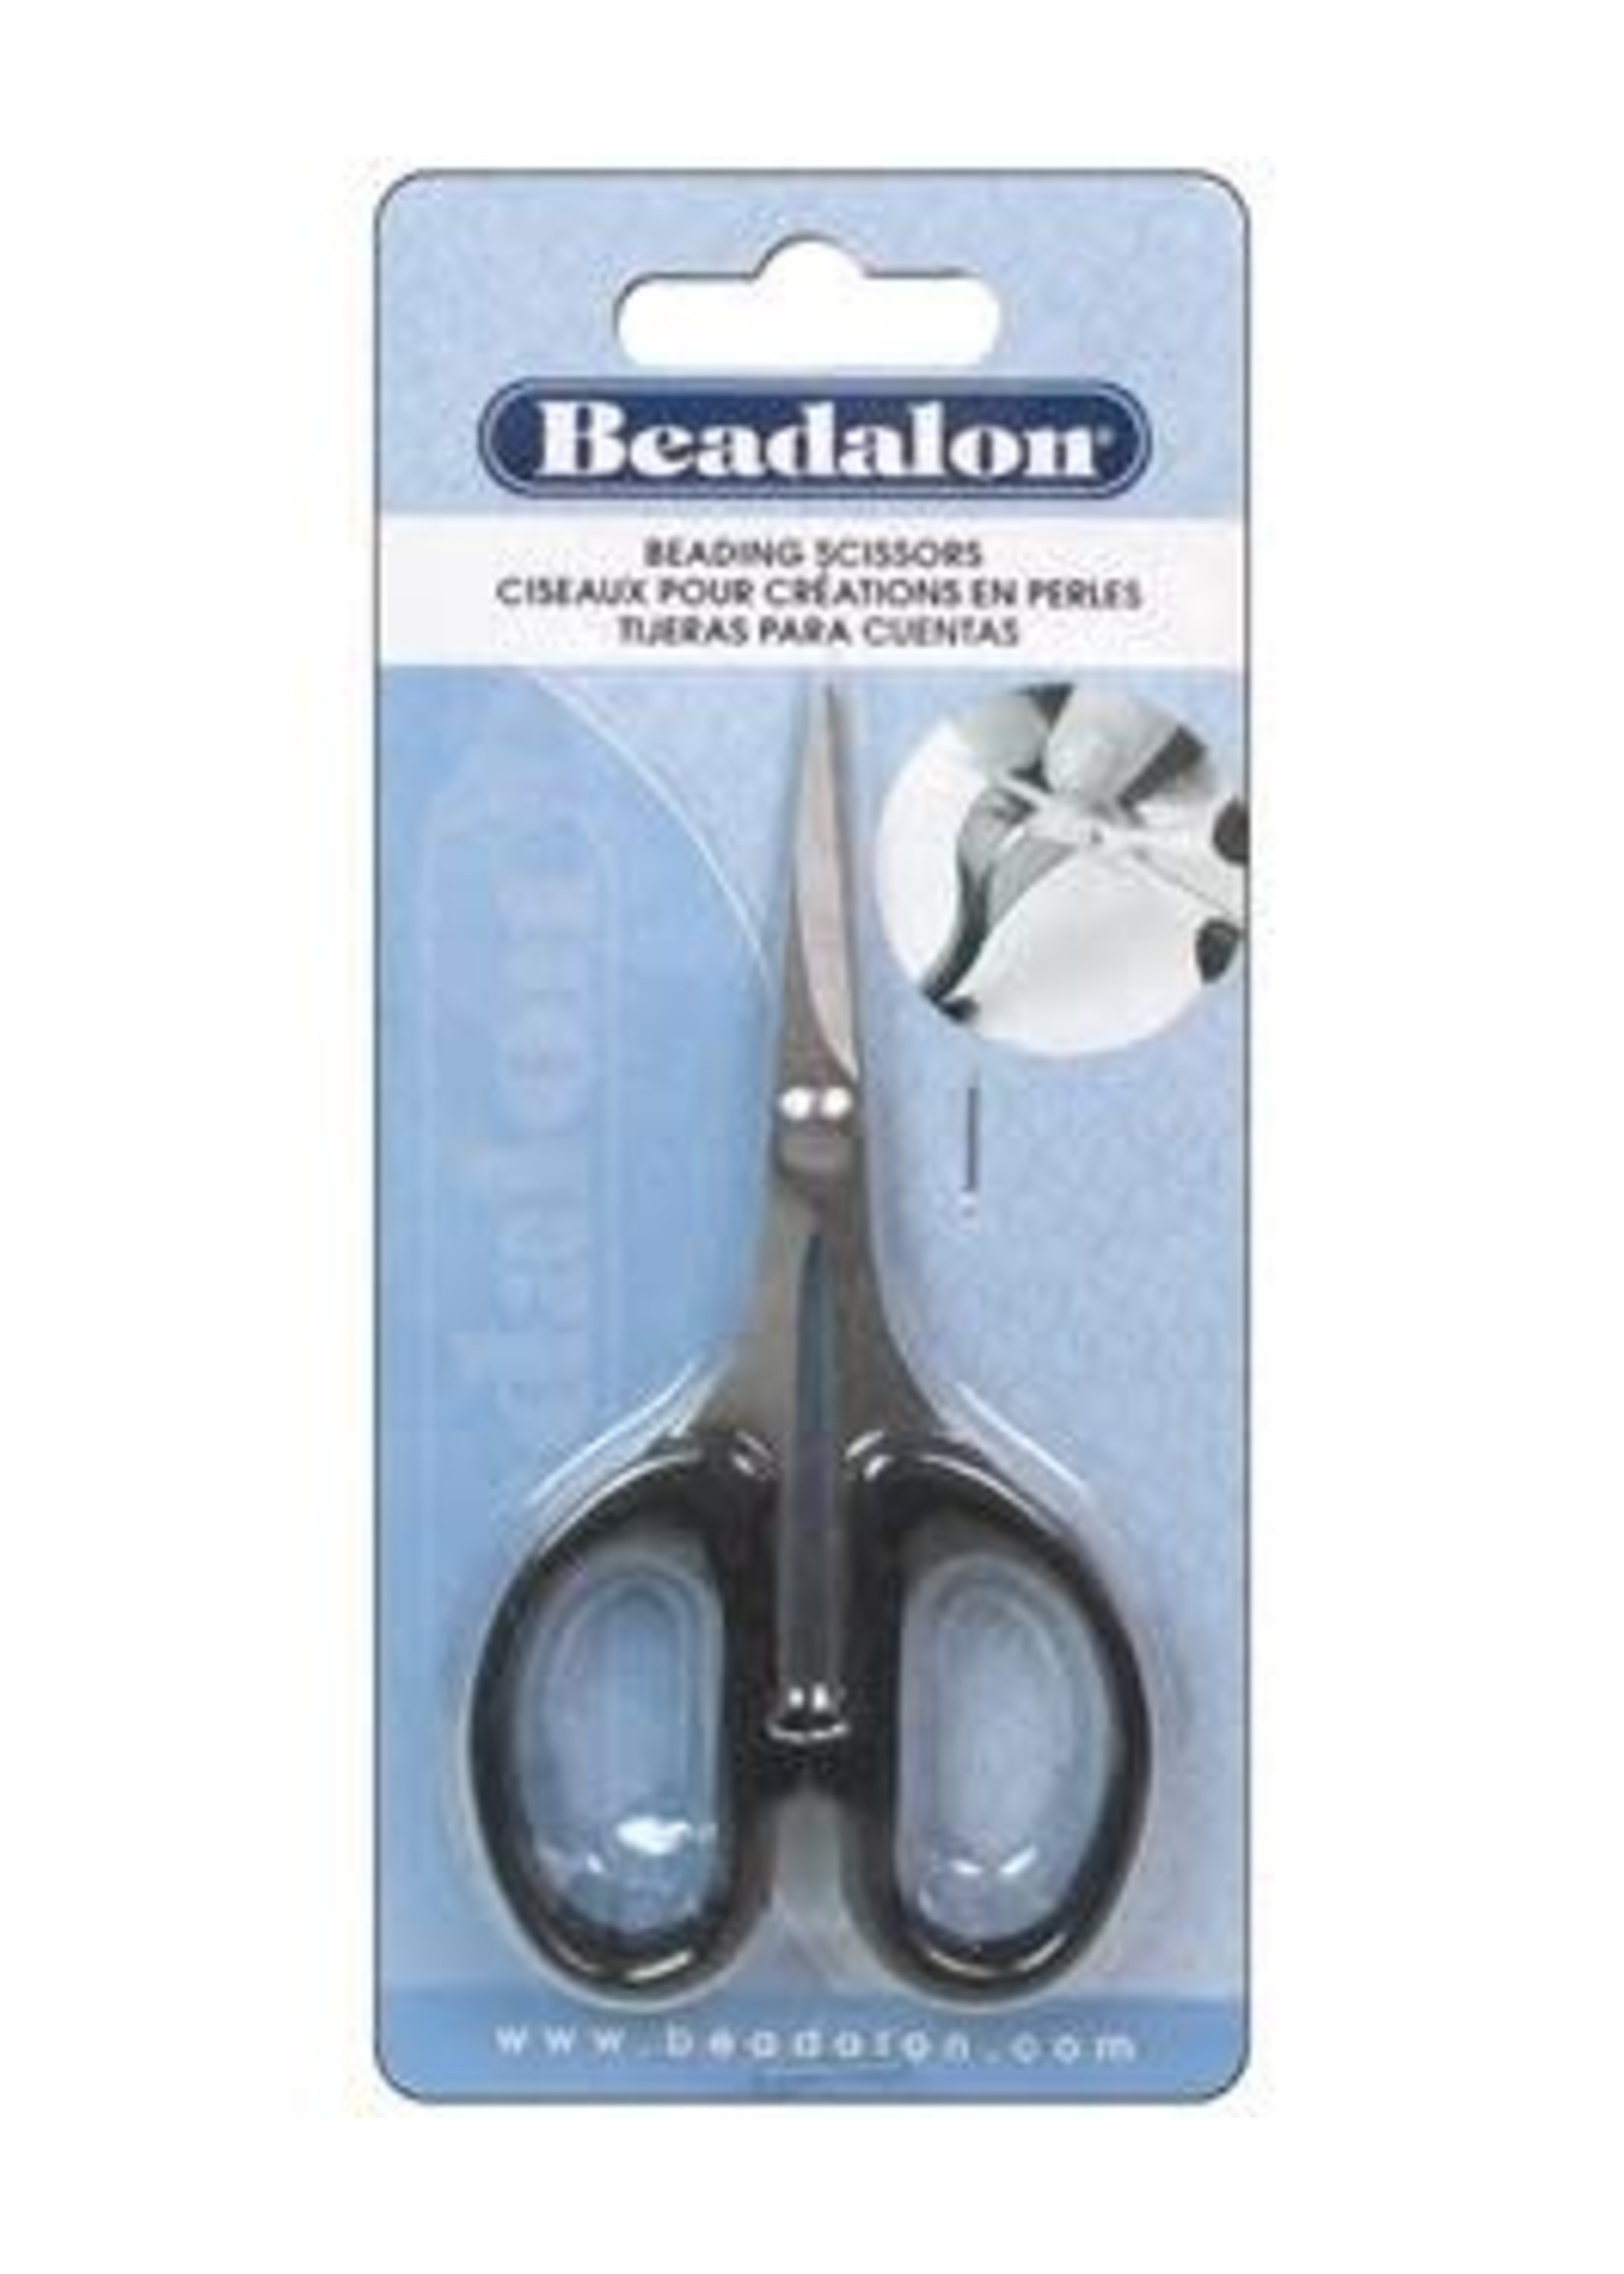 Beadalon Beading Scissors 4"